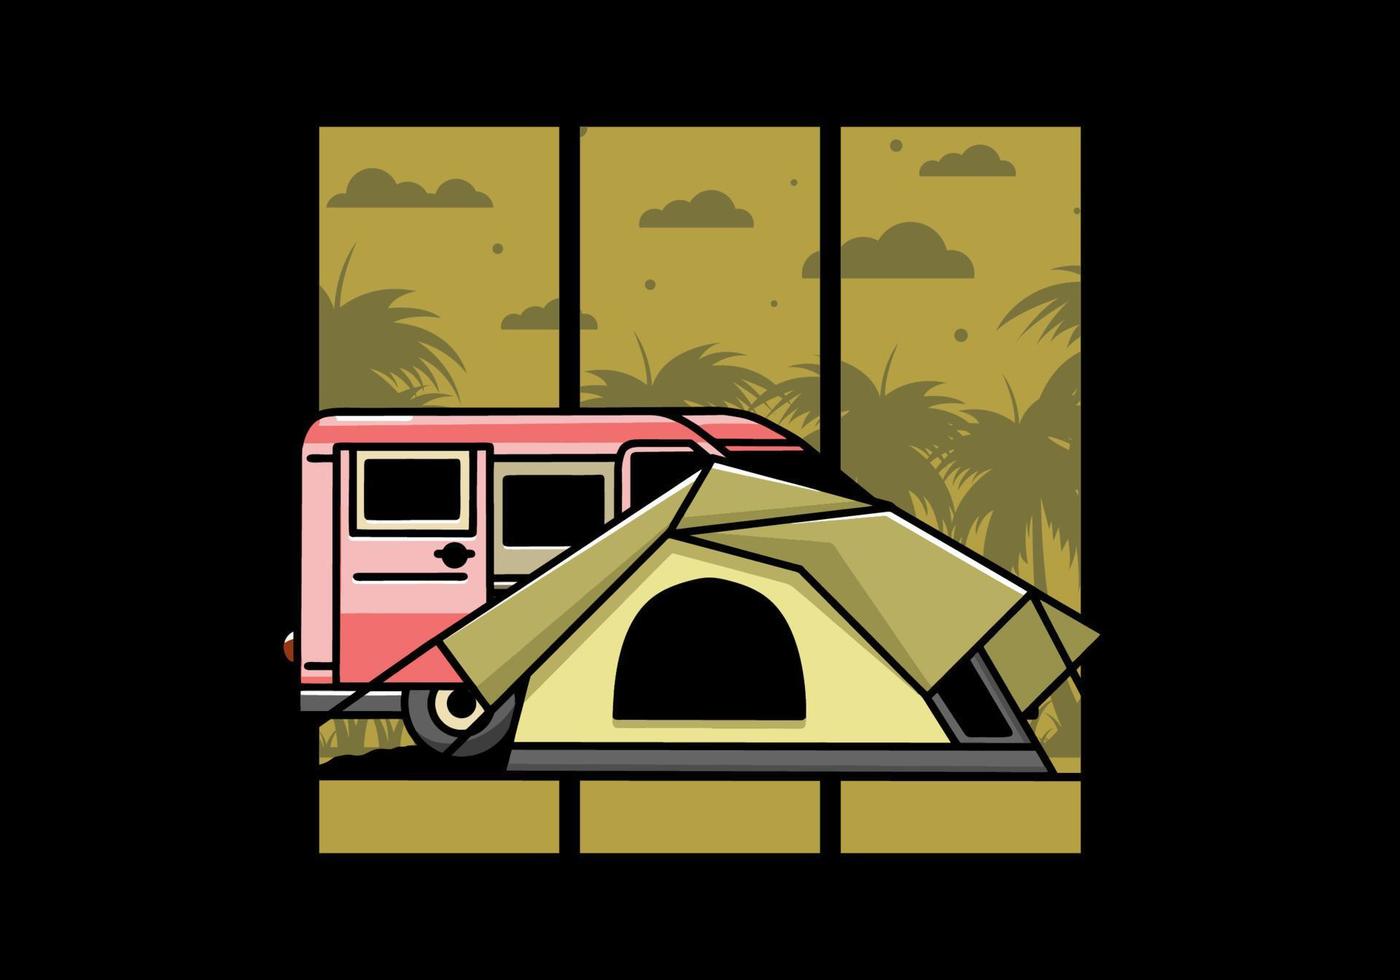 Van car and camping tent illustration design vector